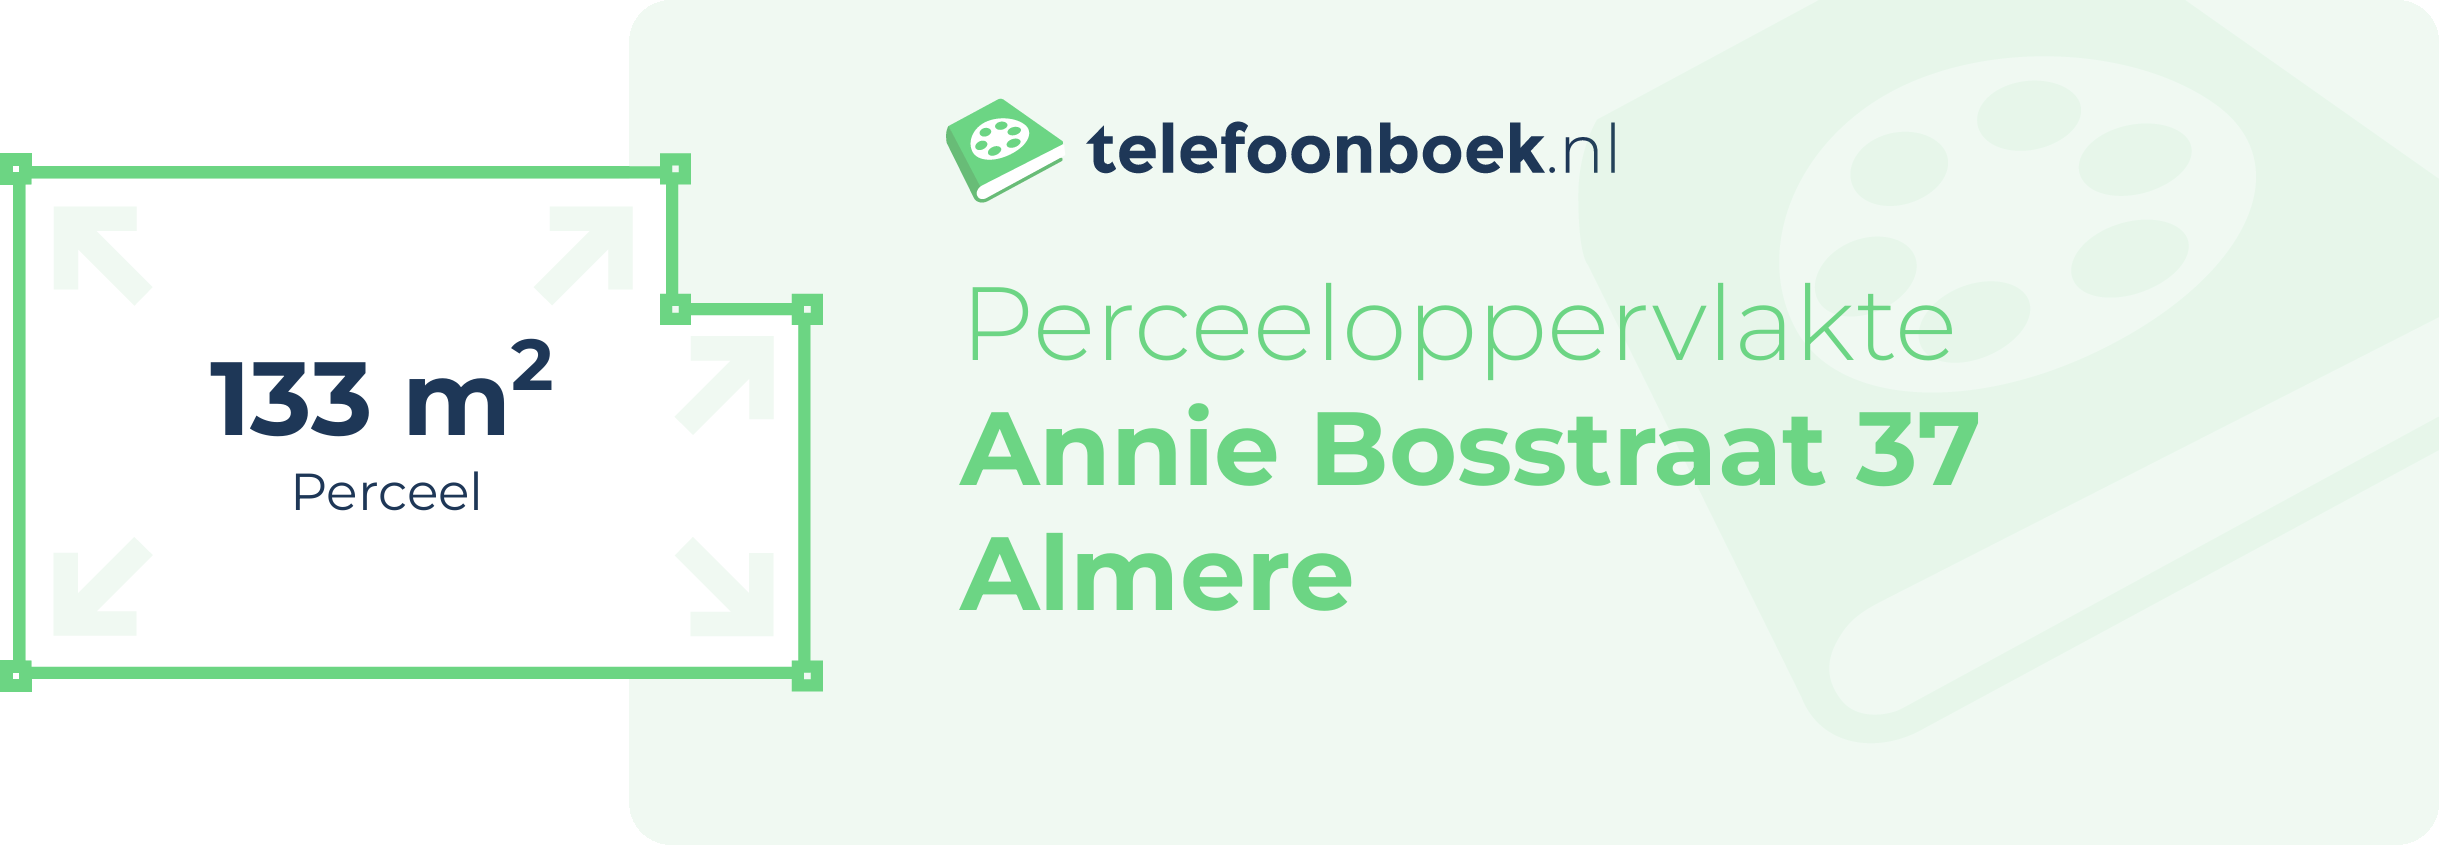 Perceeloppervlakte Annie Bosstraat 37 Almere